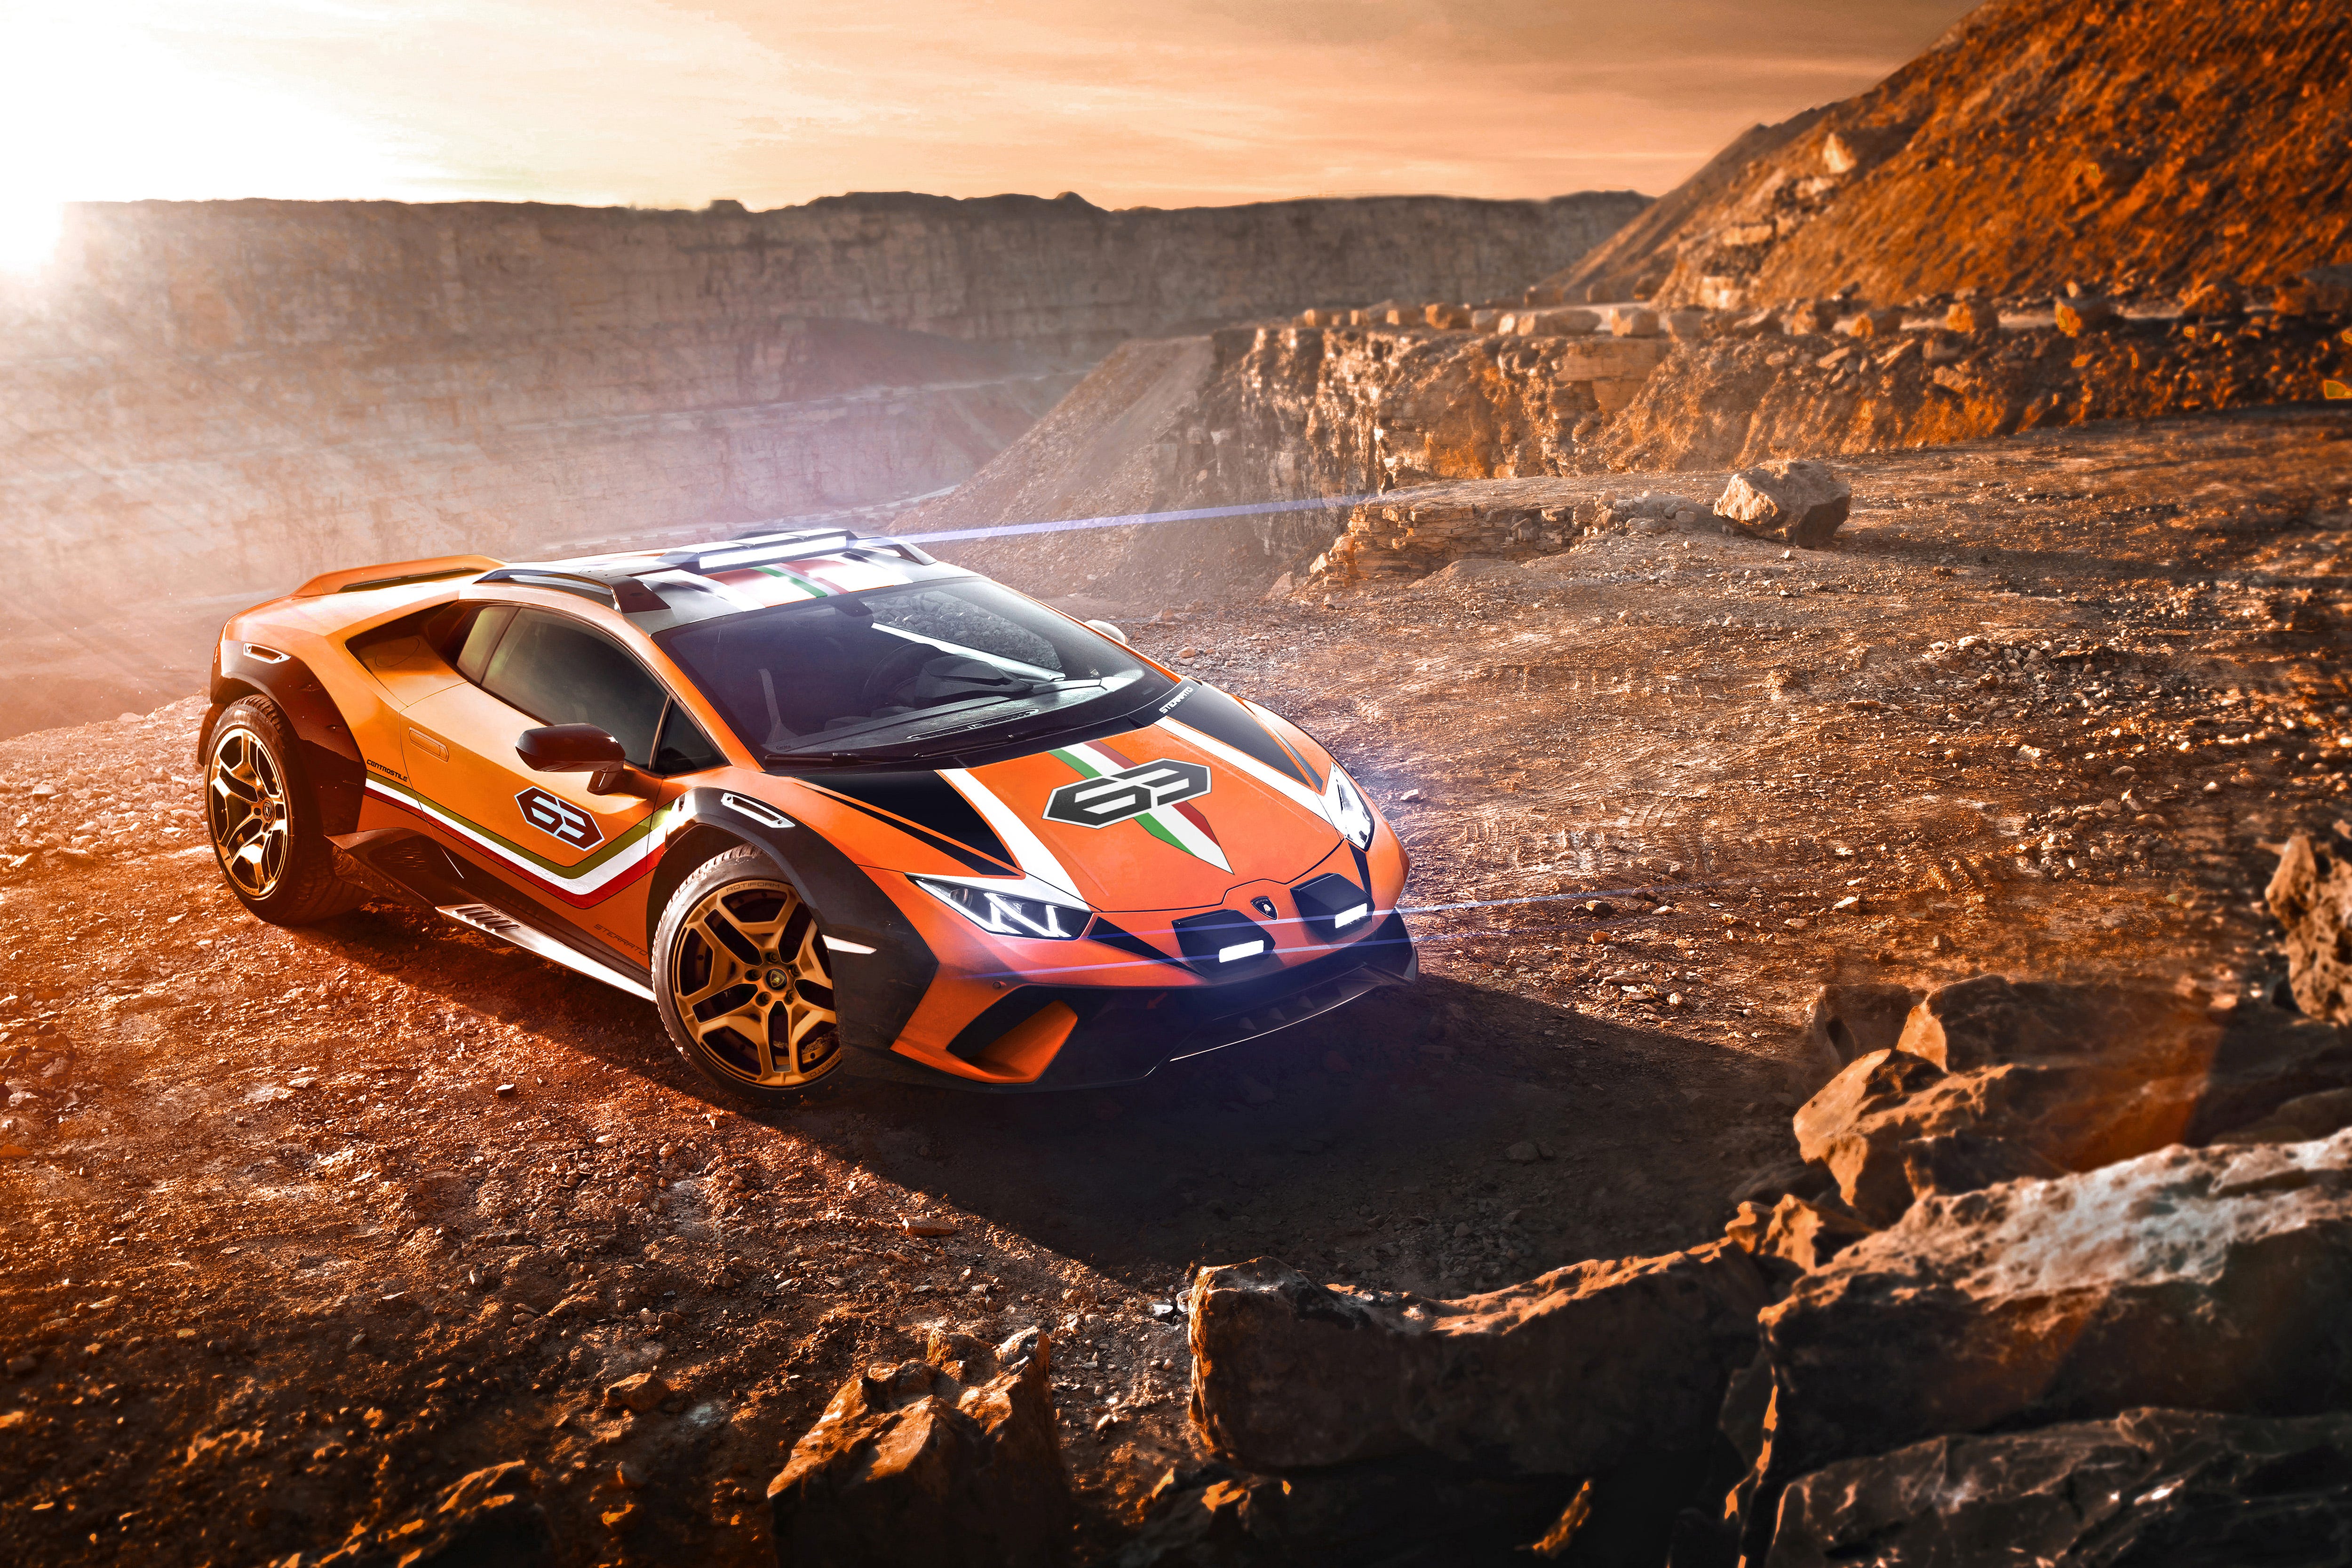 An Off Road Lamborghini Meet The Huracán Sterrato Concept